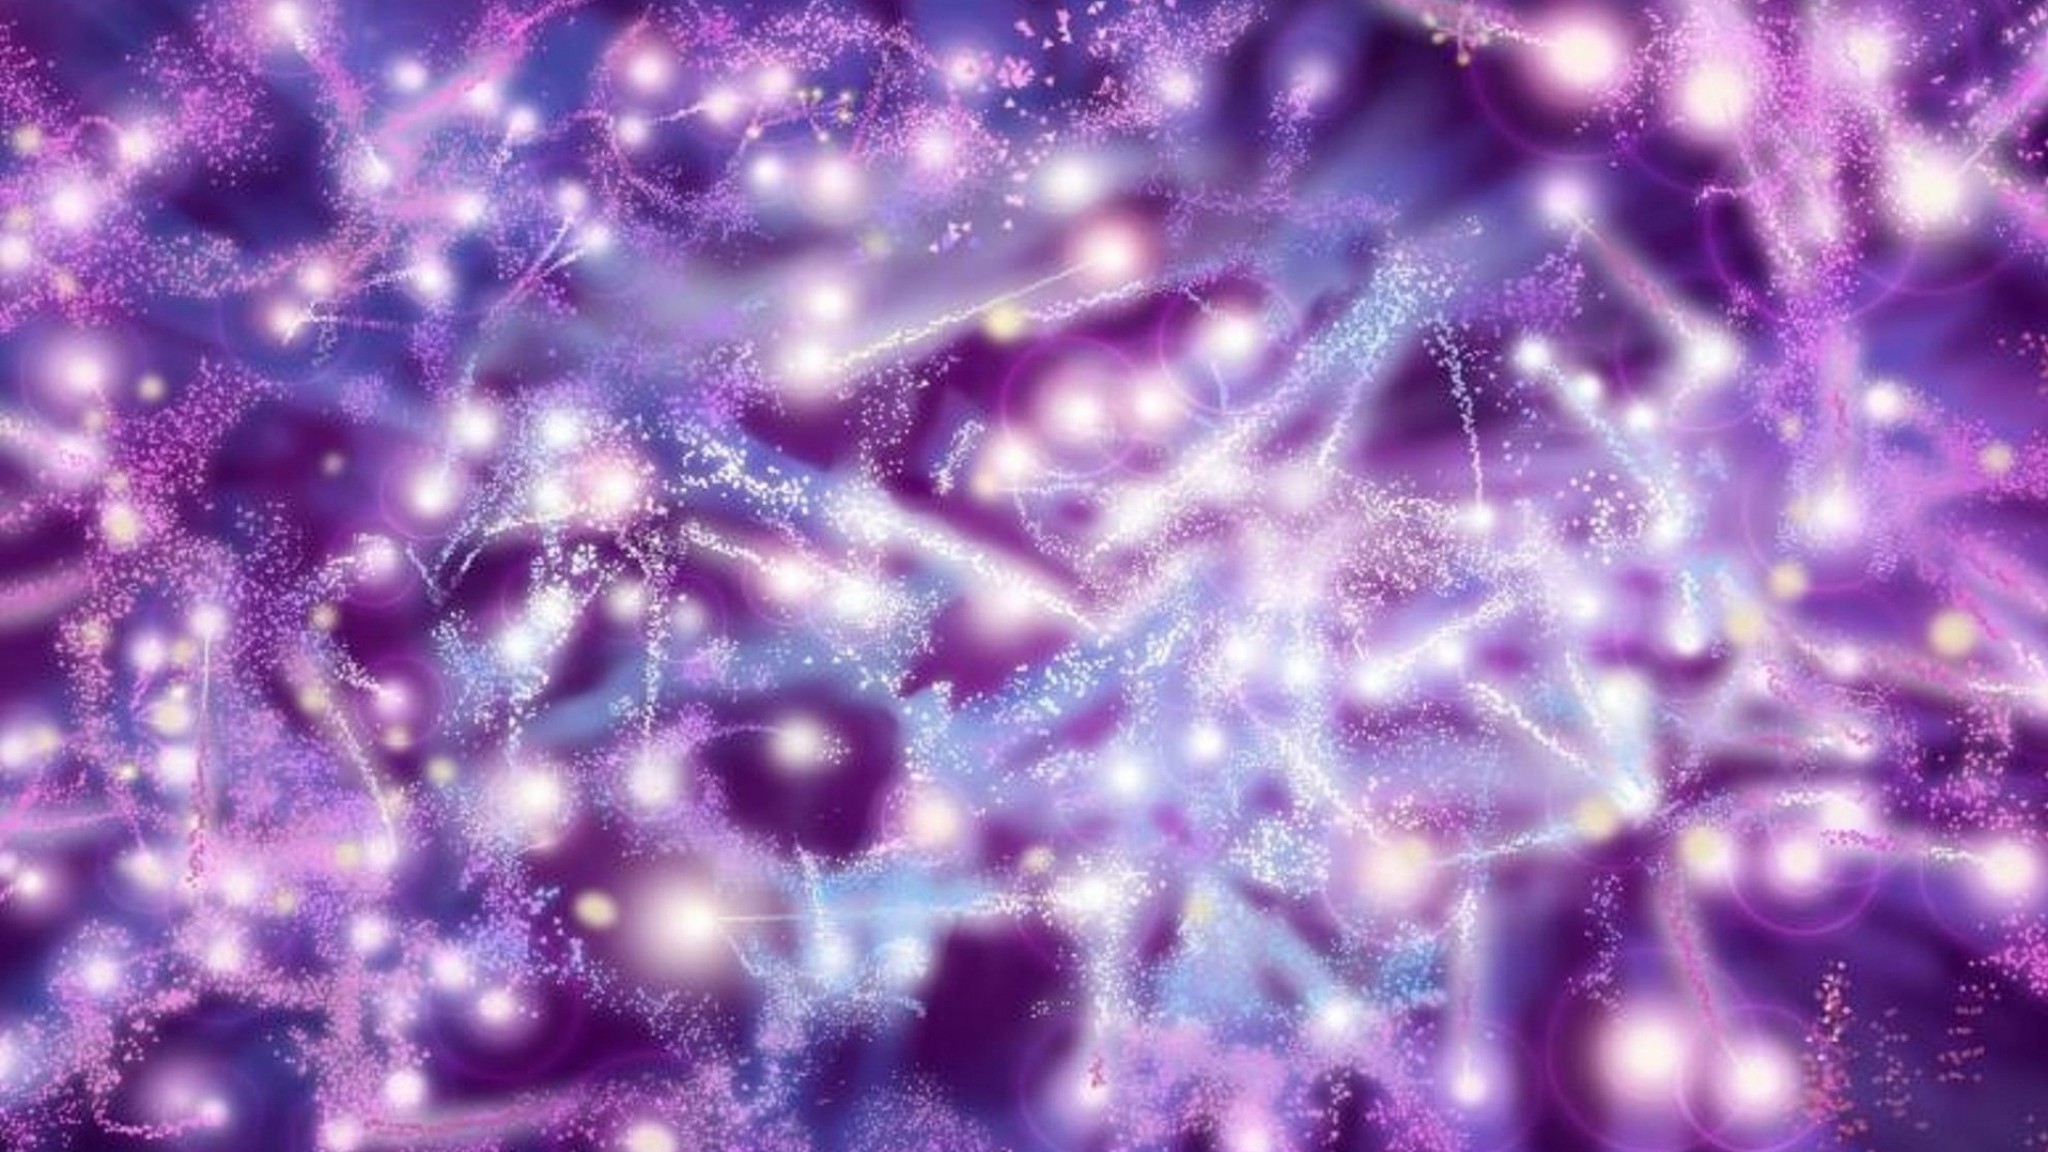 2048x1152 Related Wallpapers nebula, purple. Preview nebula